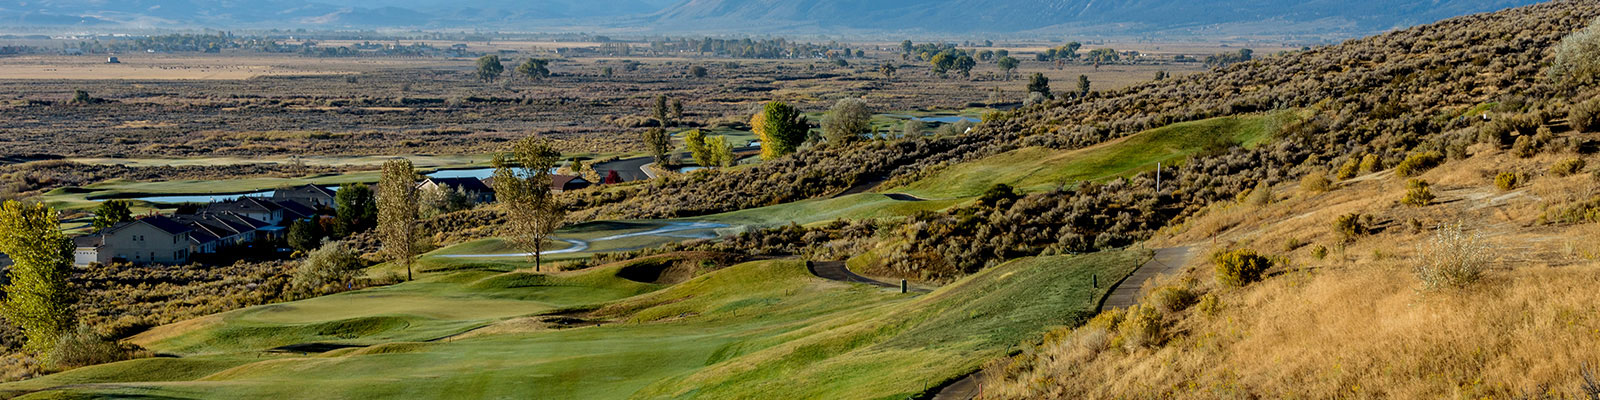 landscape view of Sunridge Golf Course